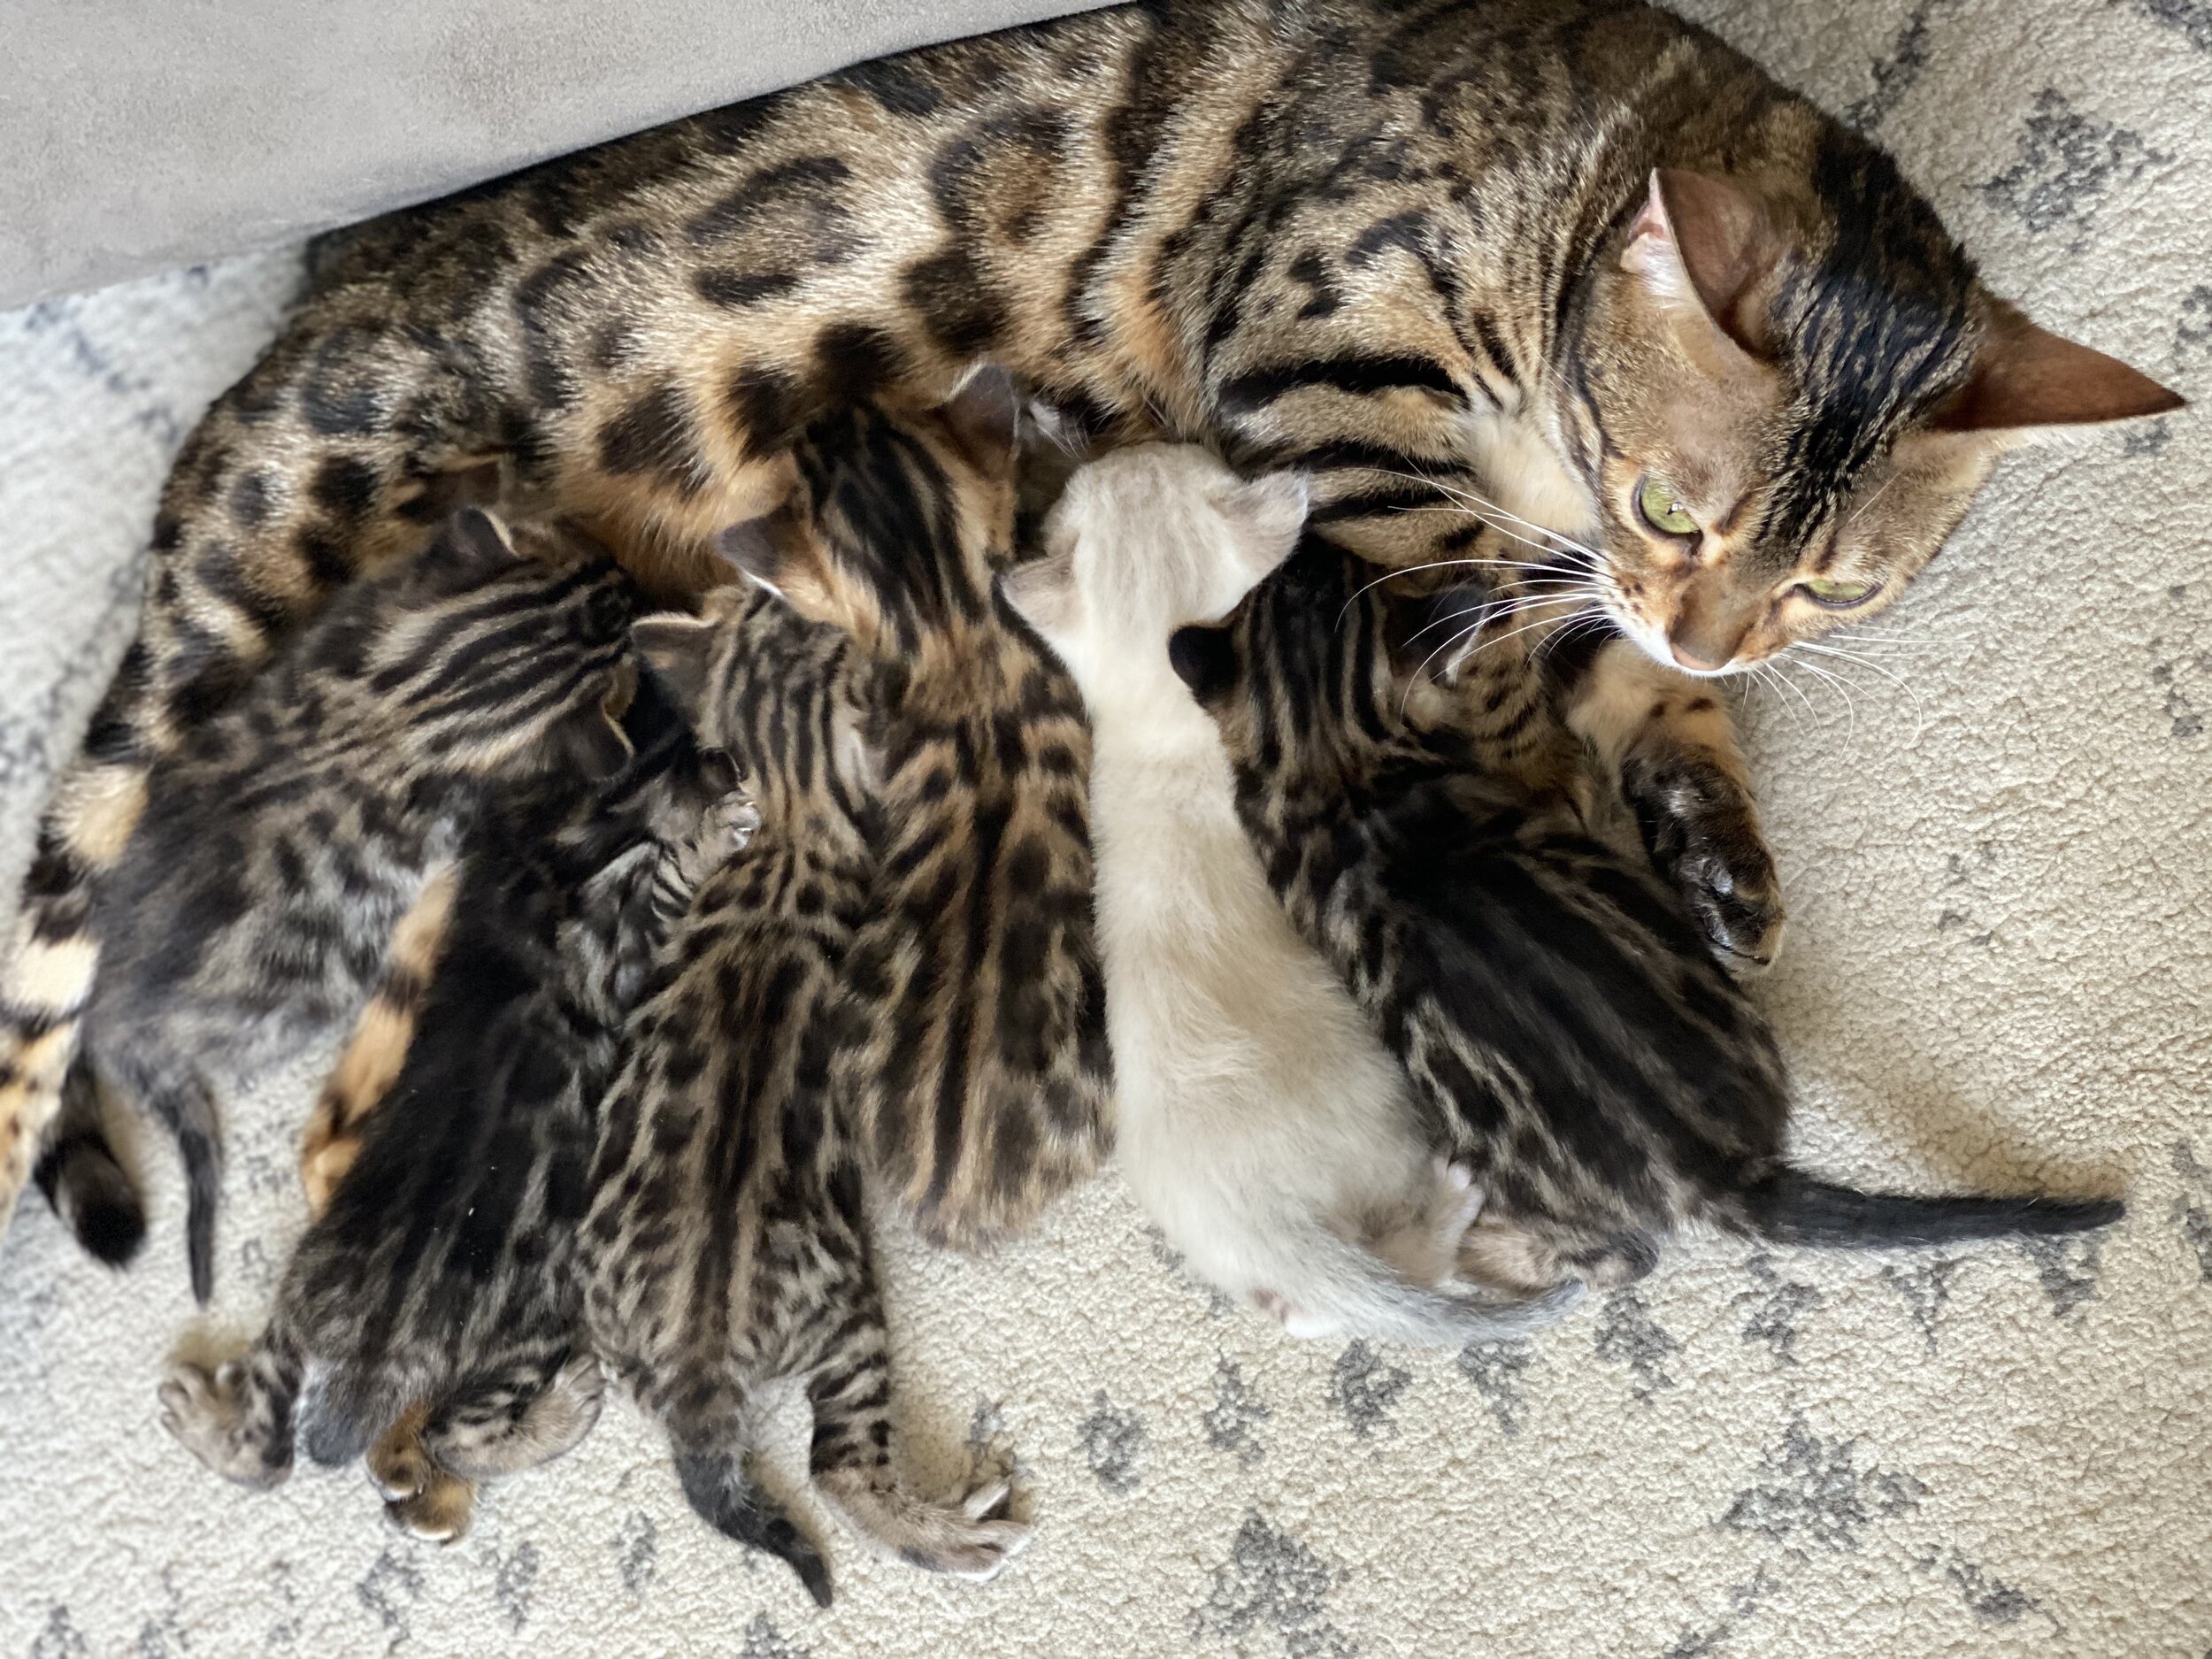 Bengal kittens available  Bengal kittens available now